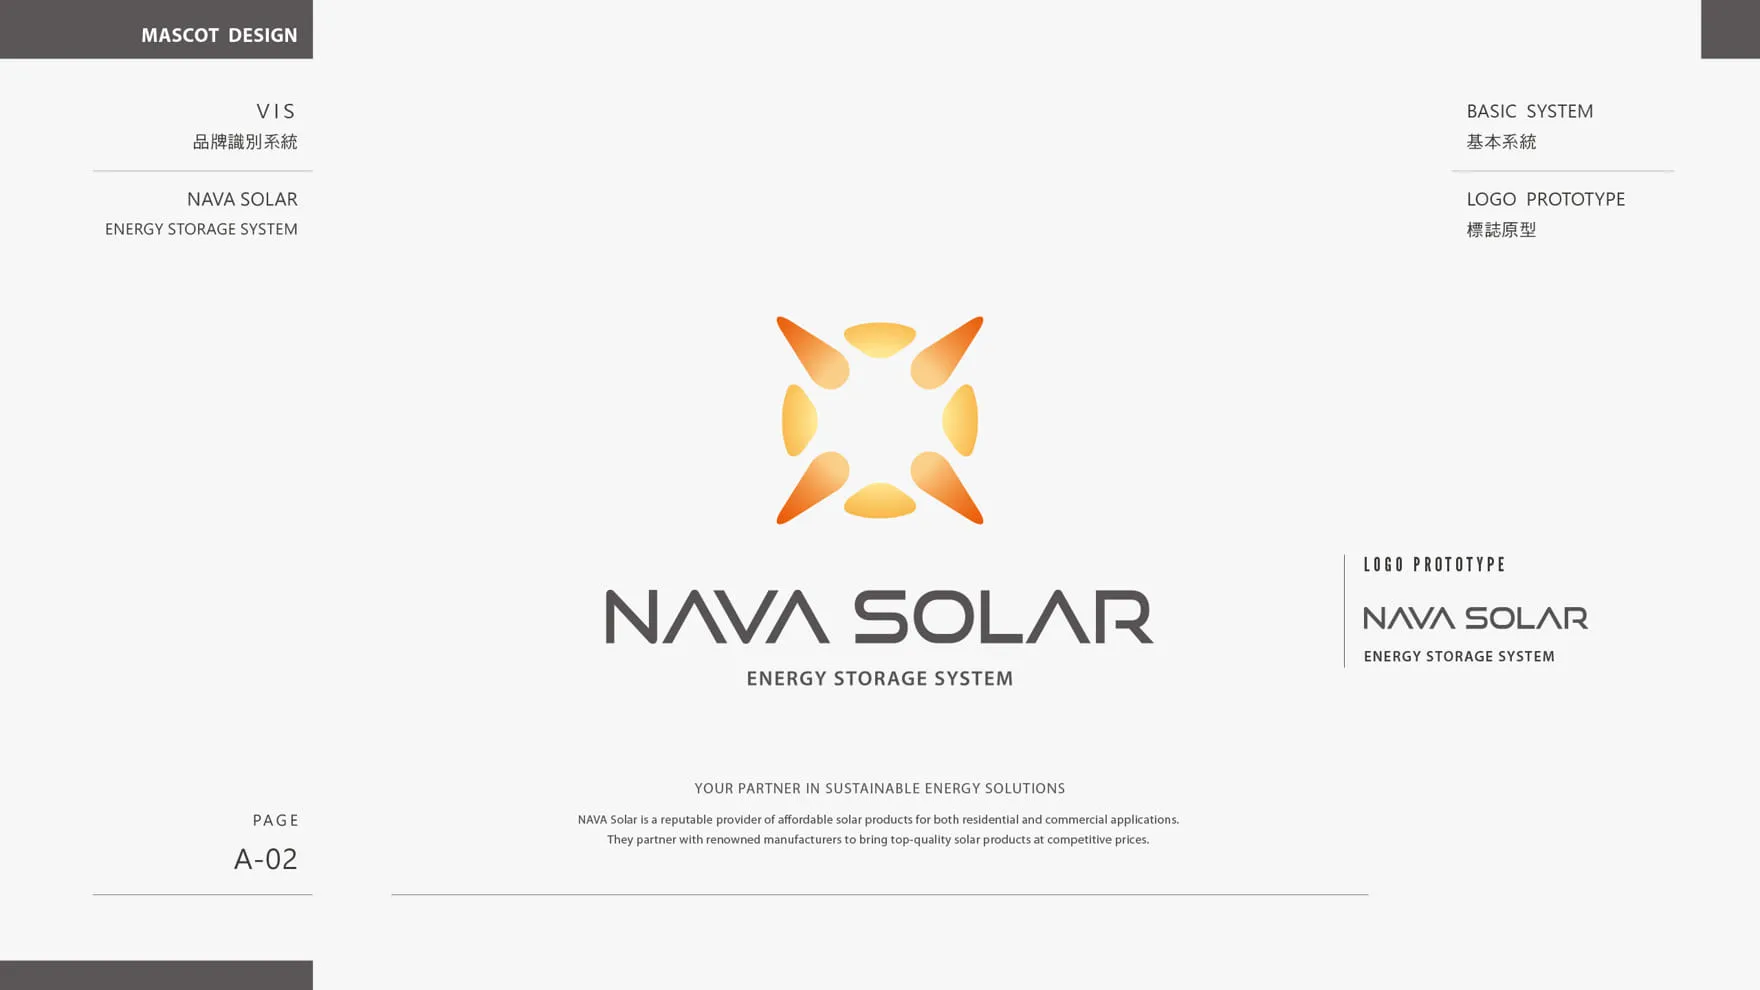 NAVA SOLAR 太陽能光電存儲LOGO品牌吉祥物設計規範 Mascot design LOGO Format